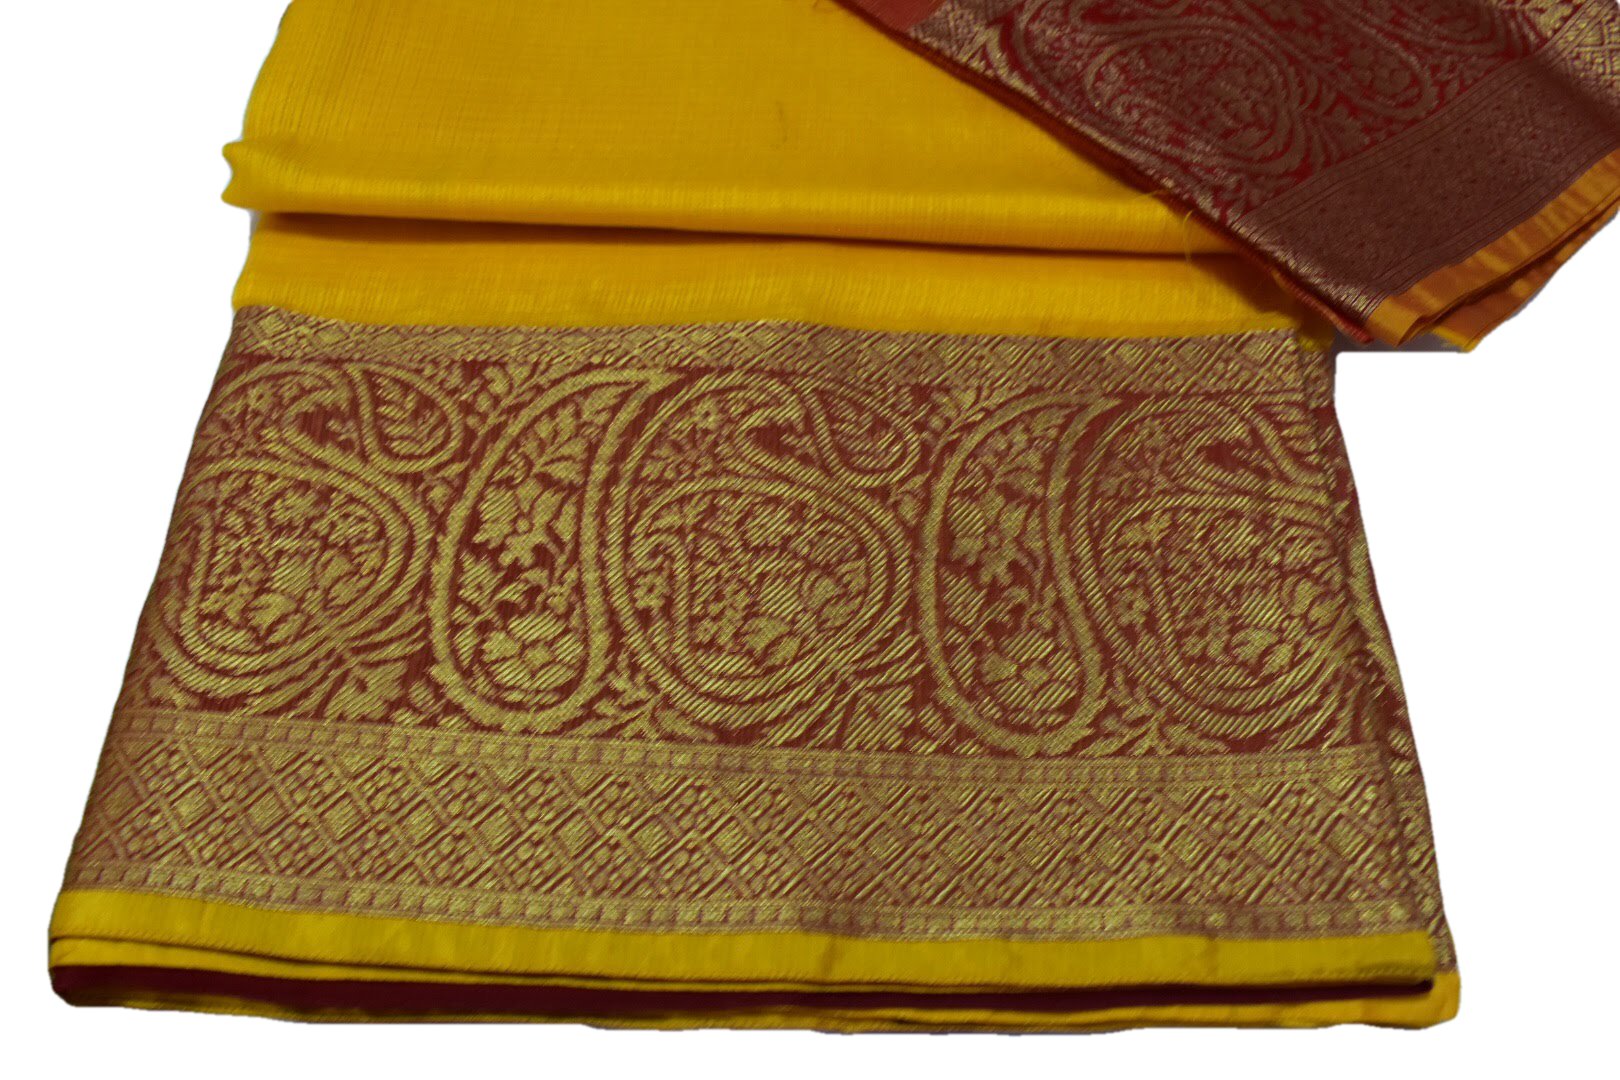 Yellow Color - Silk Cotton Blend Handloom Saree - Thick Wide Border - Gold Zari Pattern